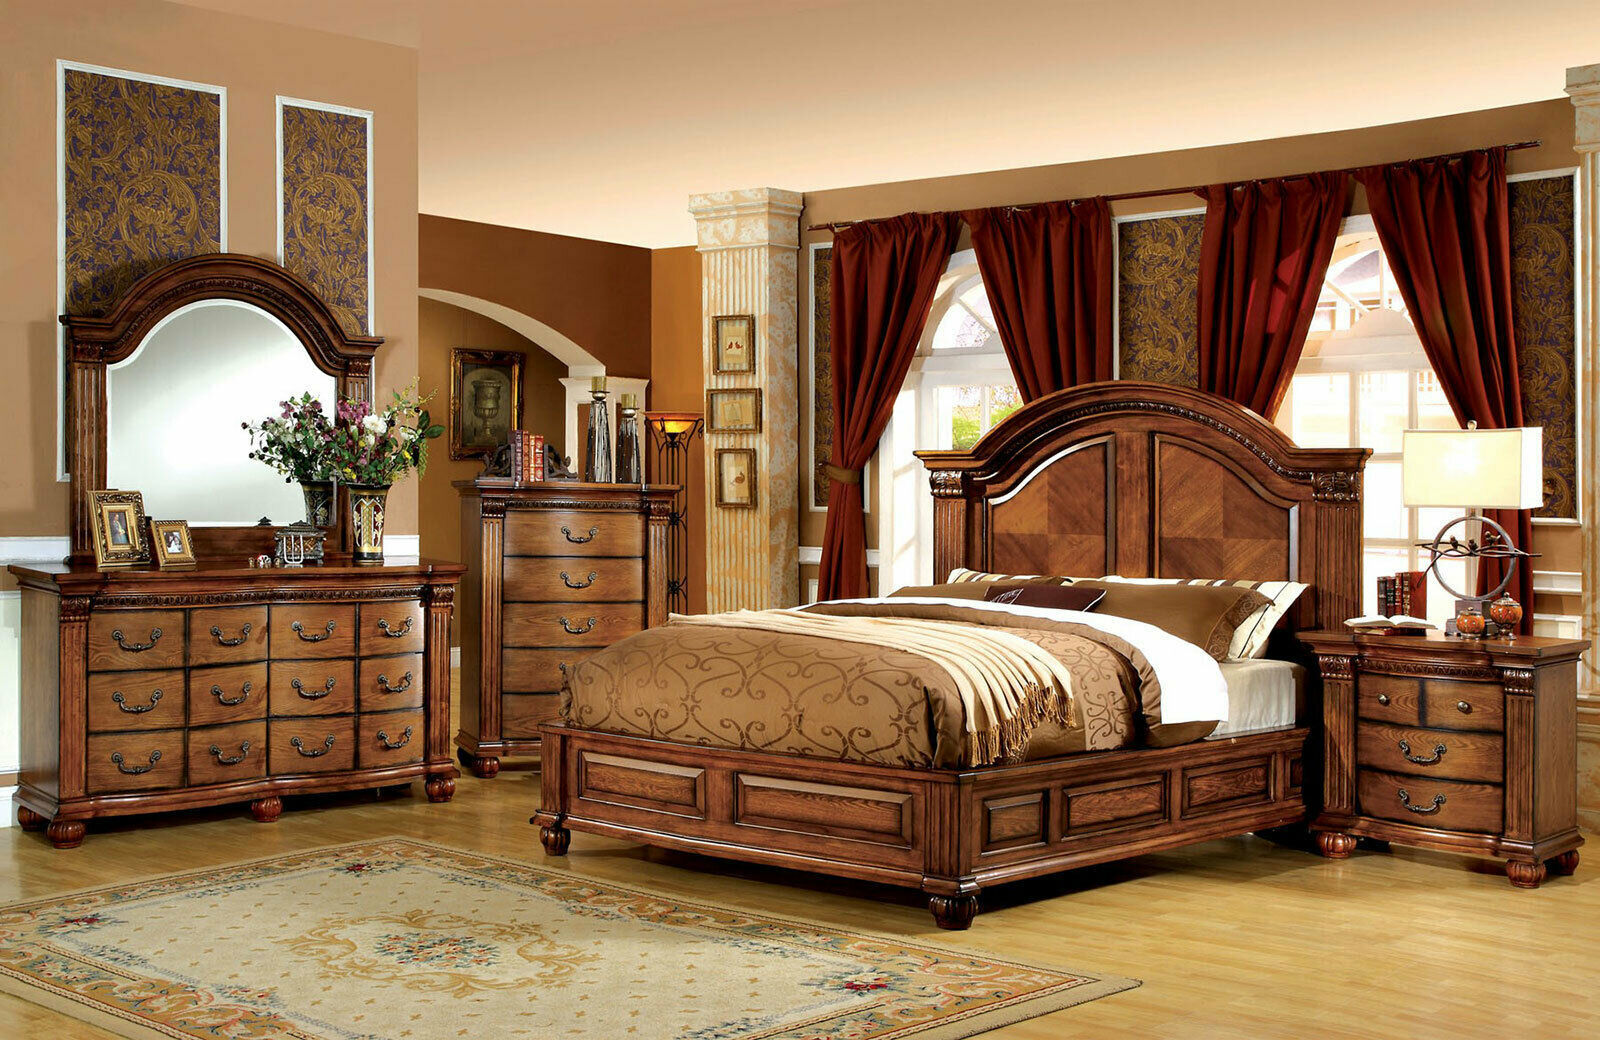 oak furniture in bedroom